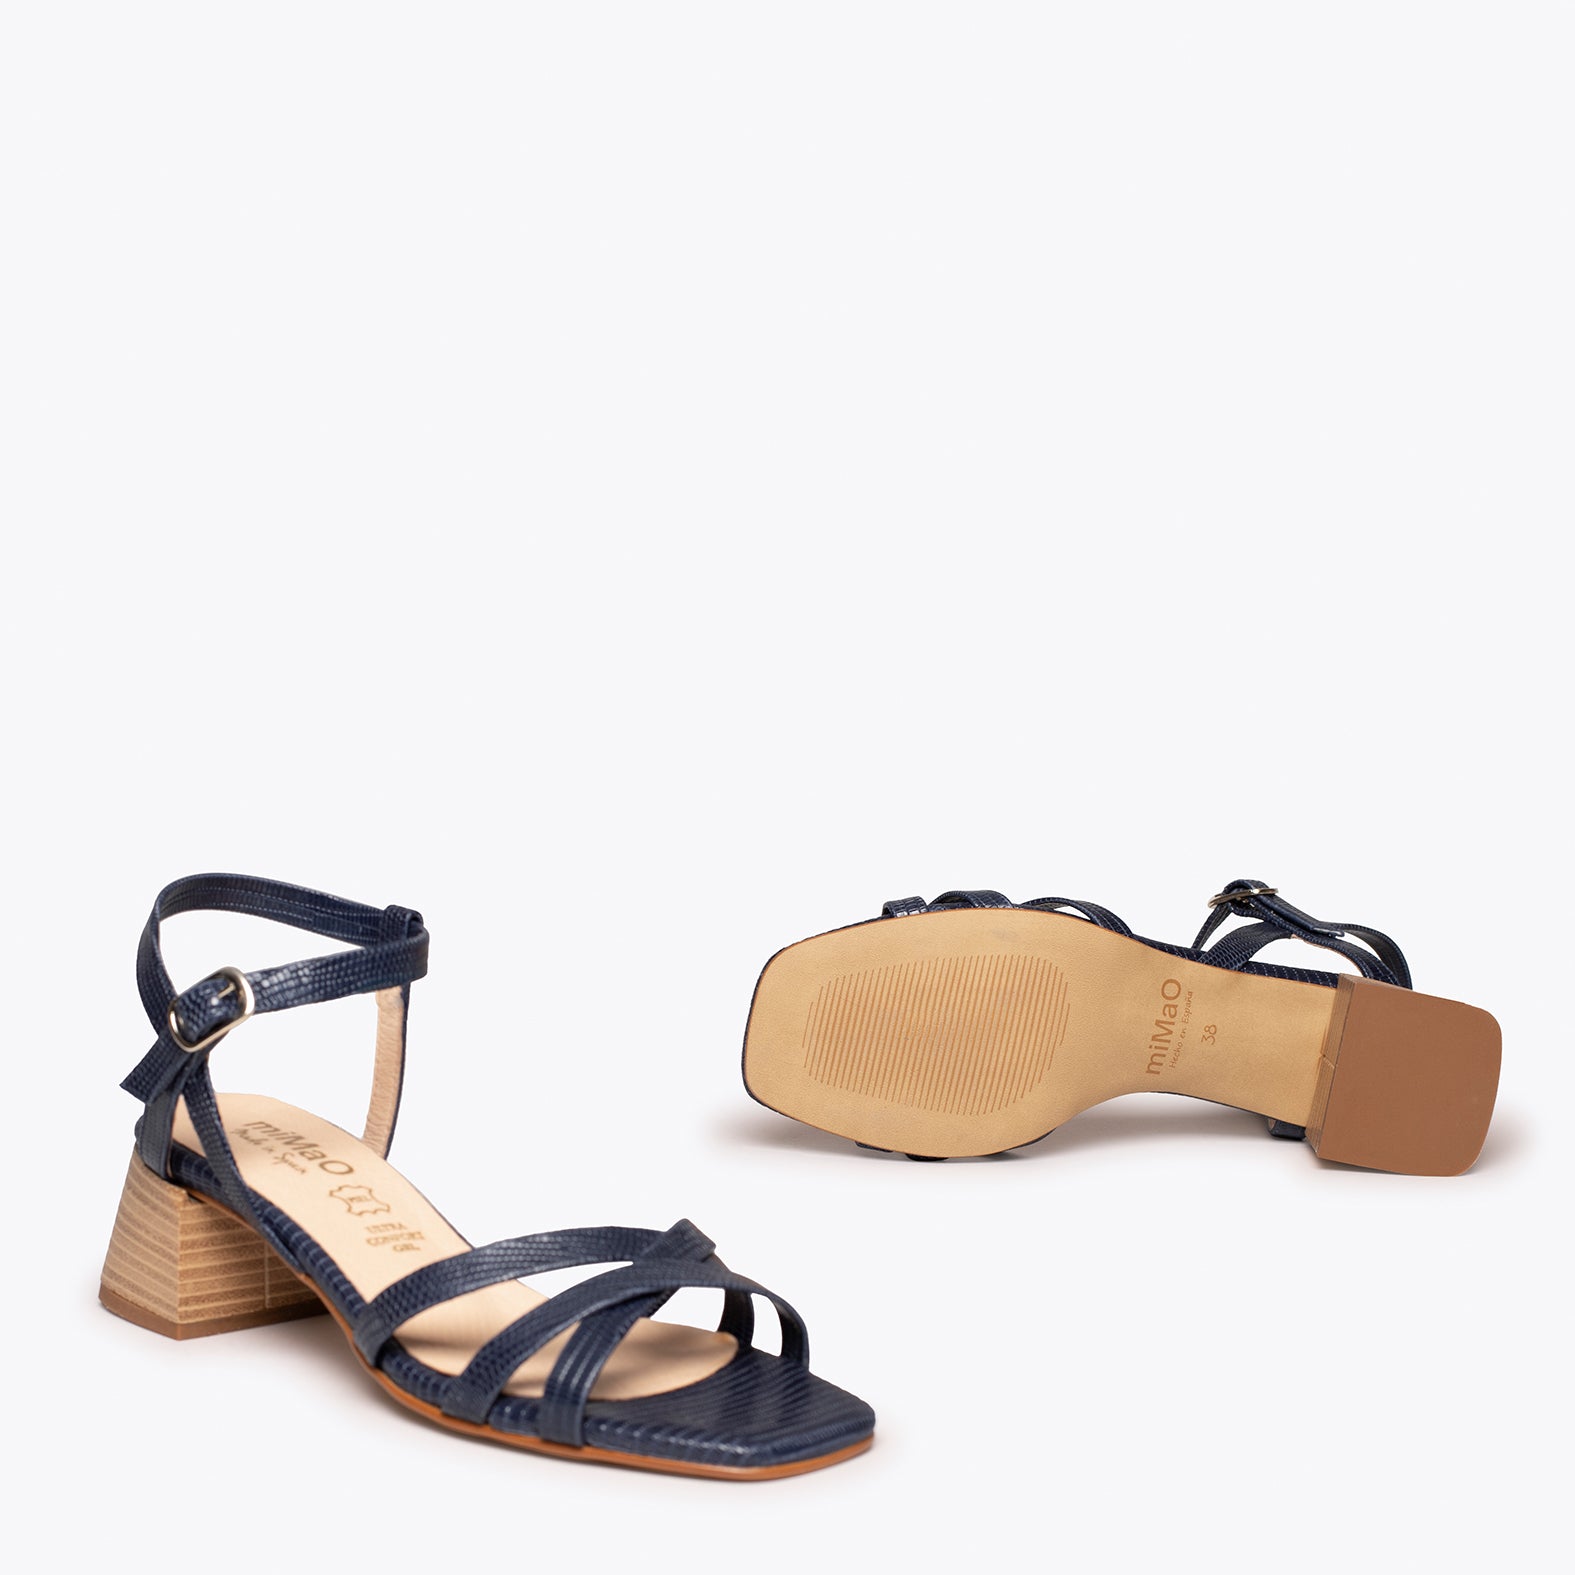 ELEGANT – NAVY mid heel sandal with snake texture